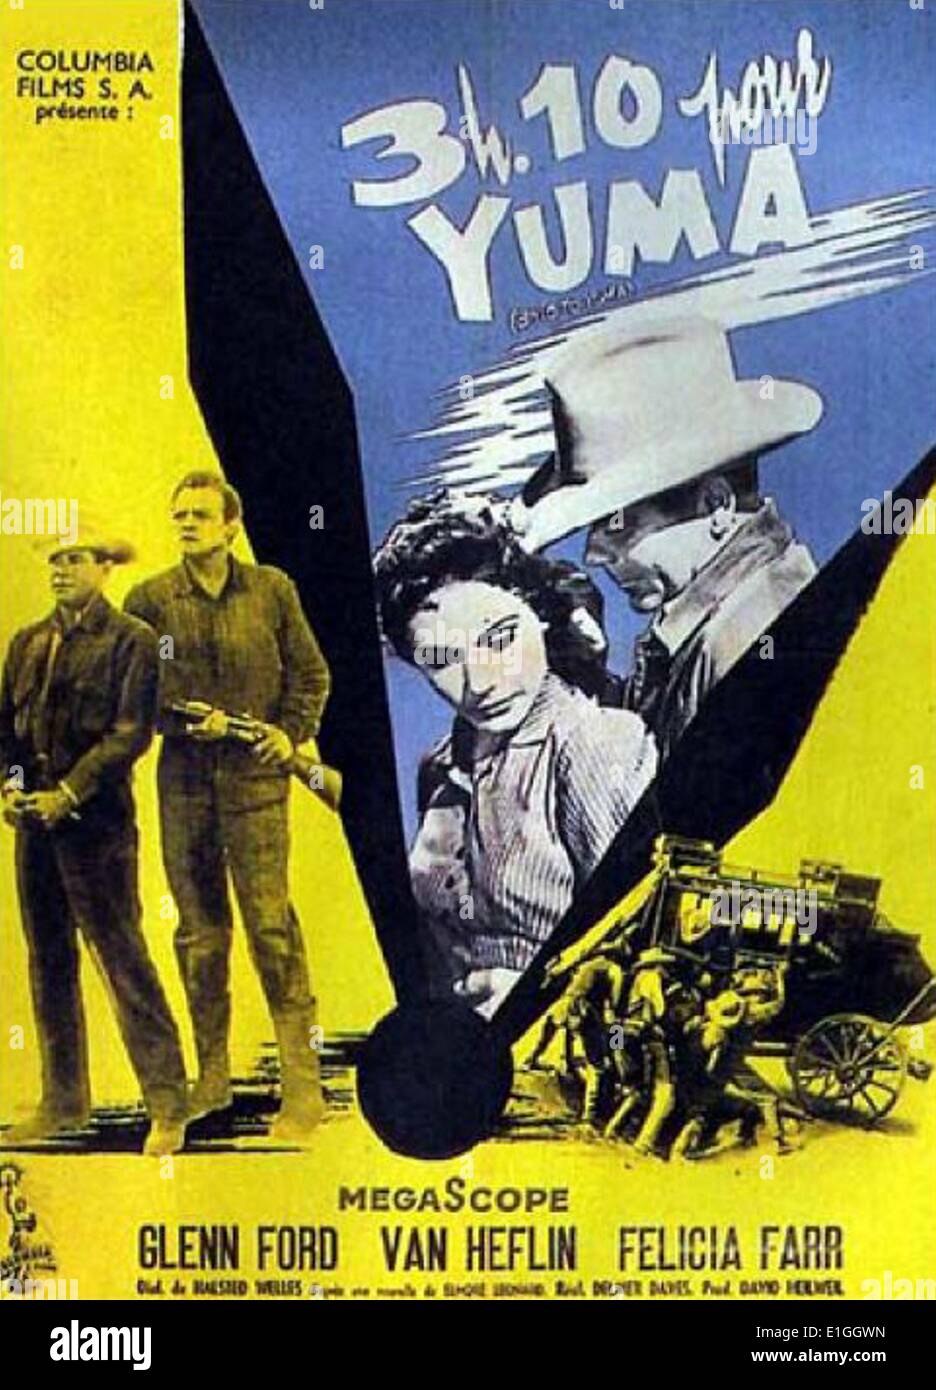 3:10 to Yuma starring Glen Ford, Van Heflin and Felicia Farr a 1957 American western film. Stock Photo